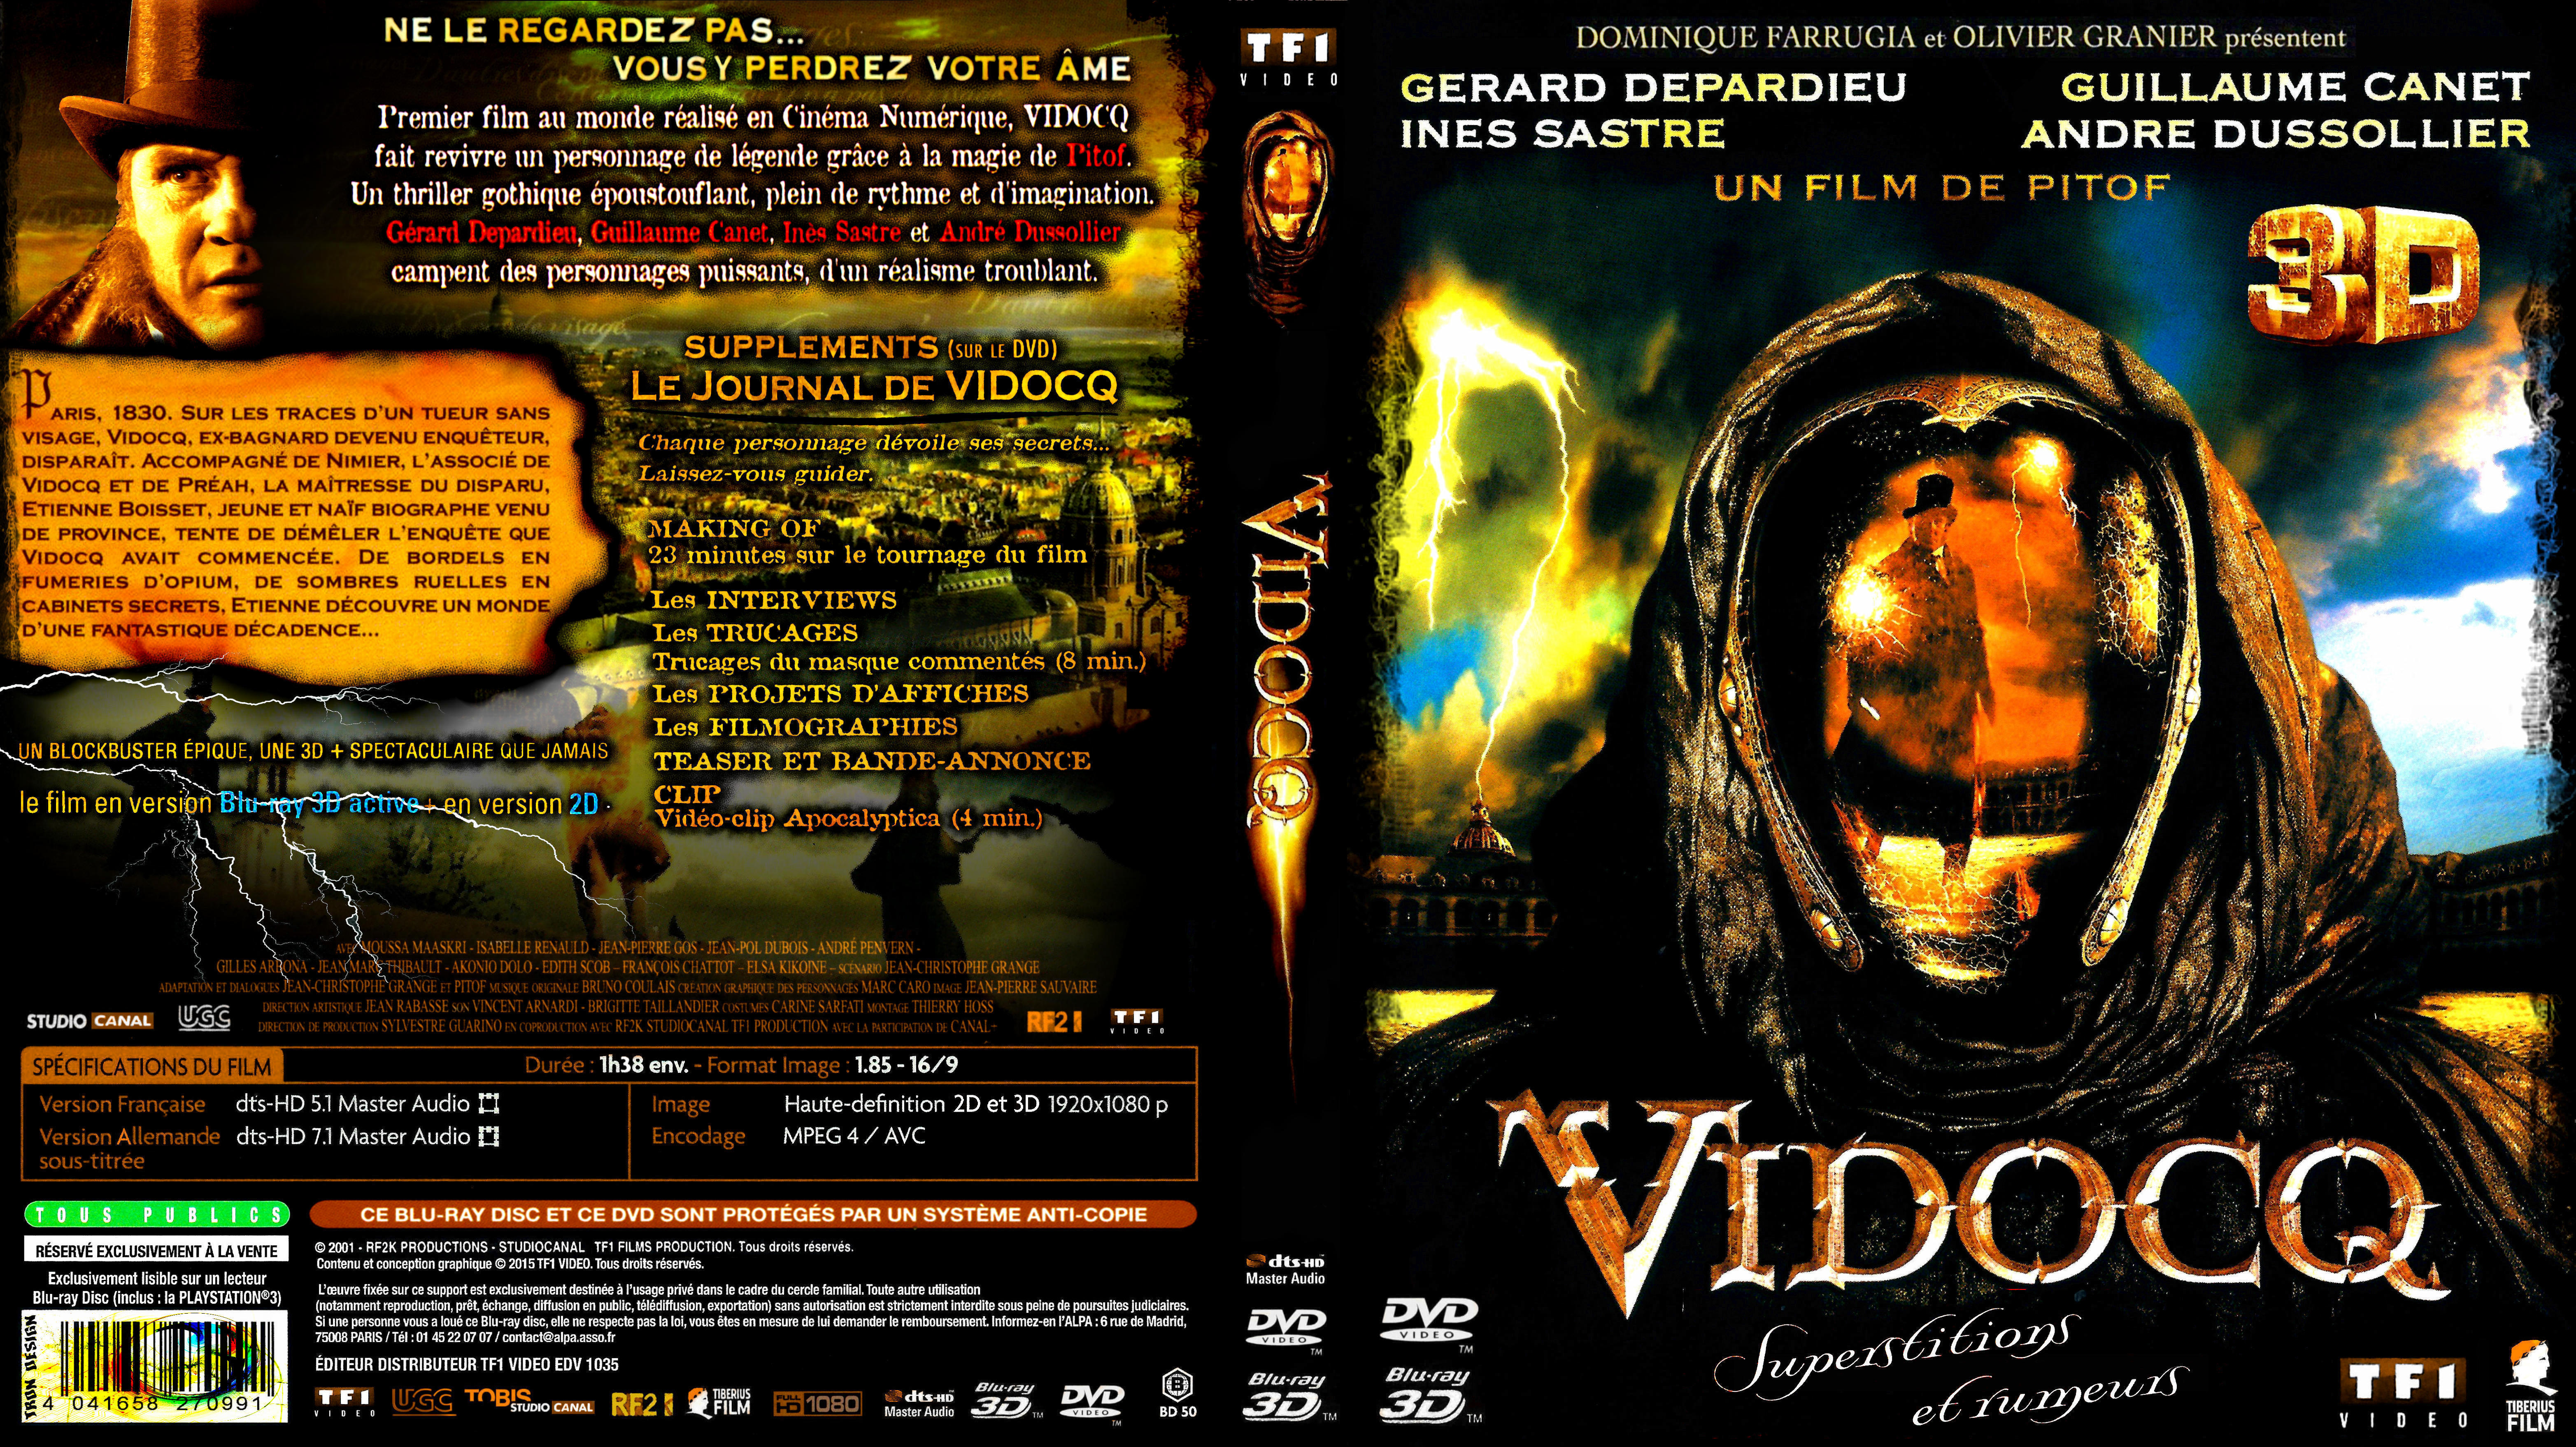 Jaquette DVD Vidocq 3D+2D custom (BLU-RAY)